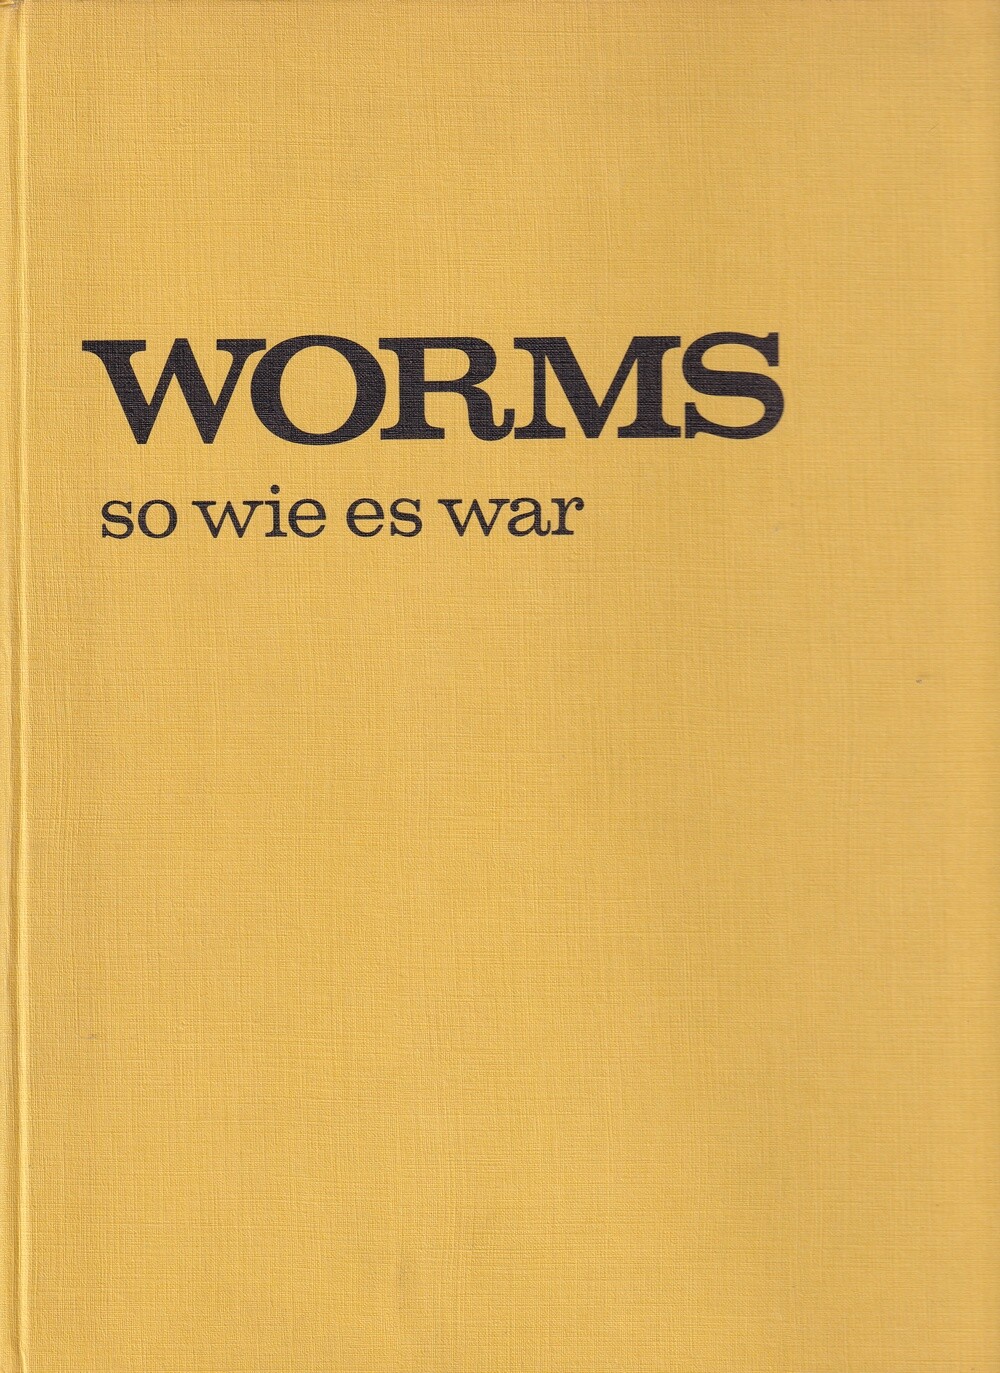 Worms, so wie es war (Kulturverein Guntersblum CC BY-NC-SA)